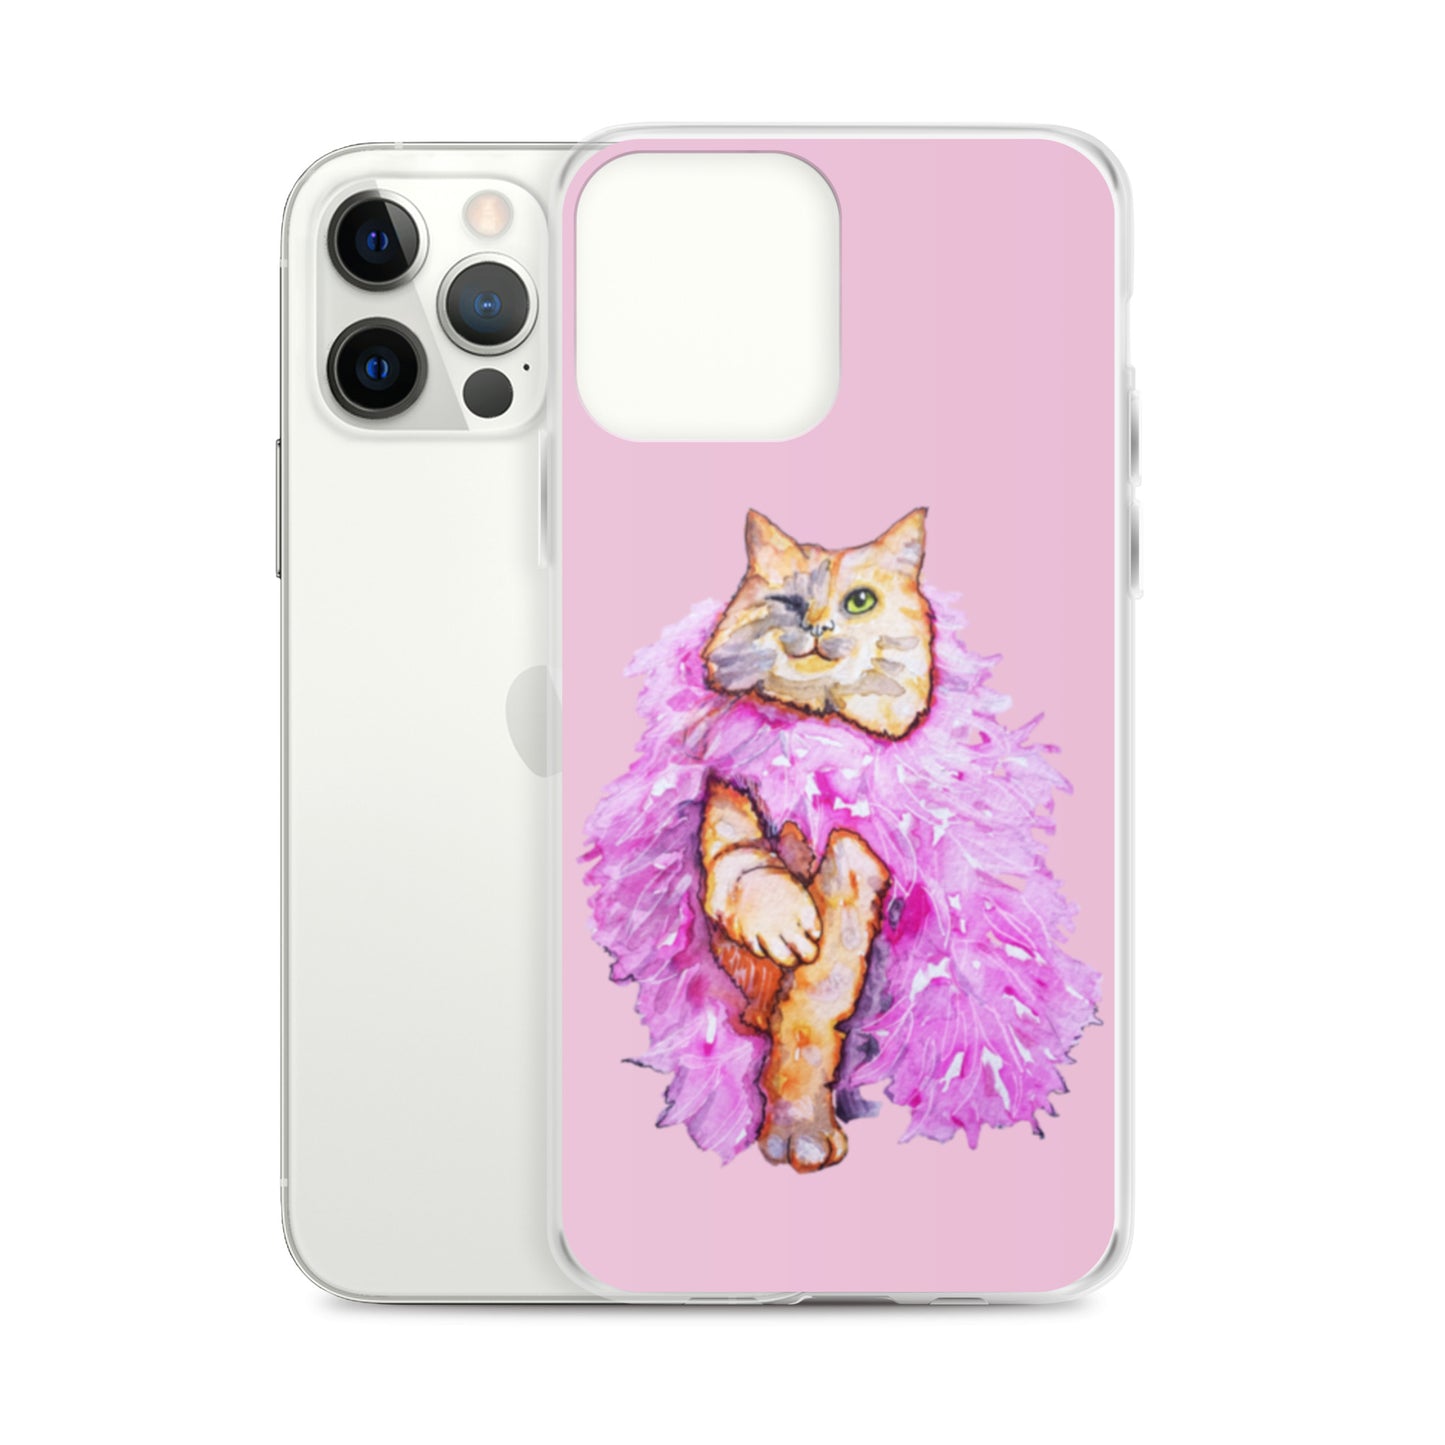 Boa Cat Wink iPhone Case